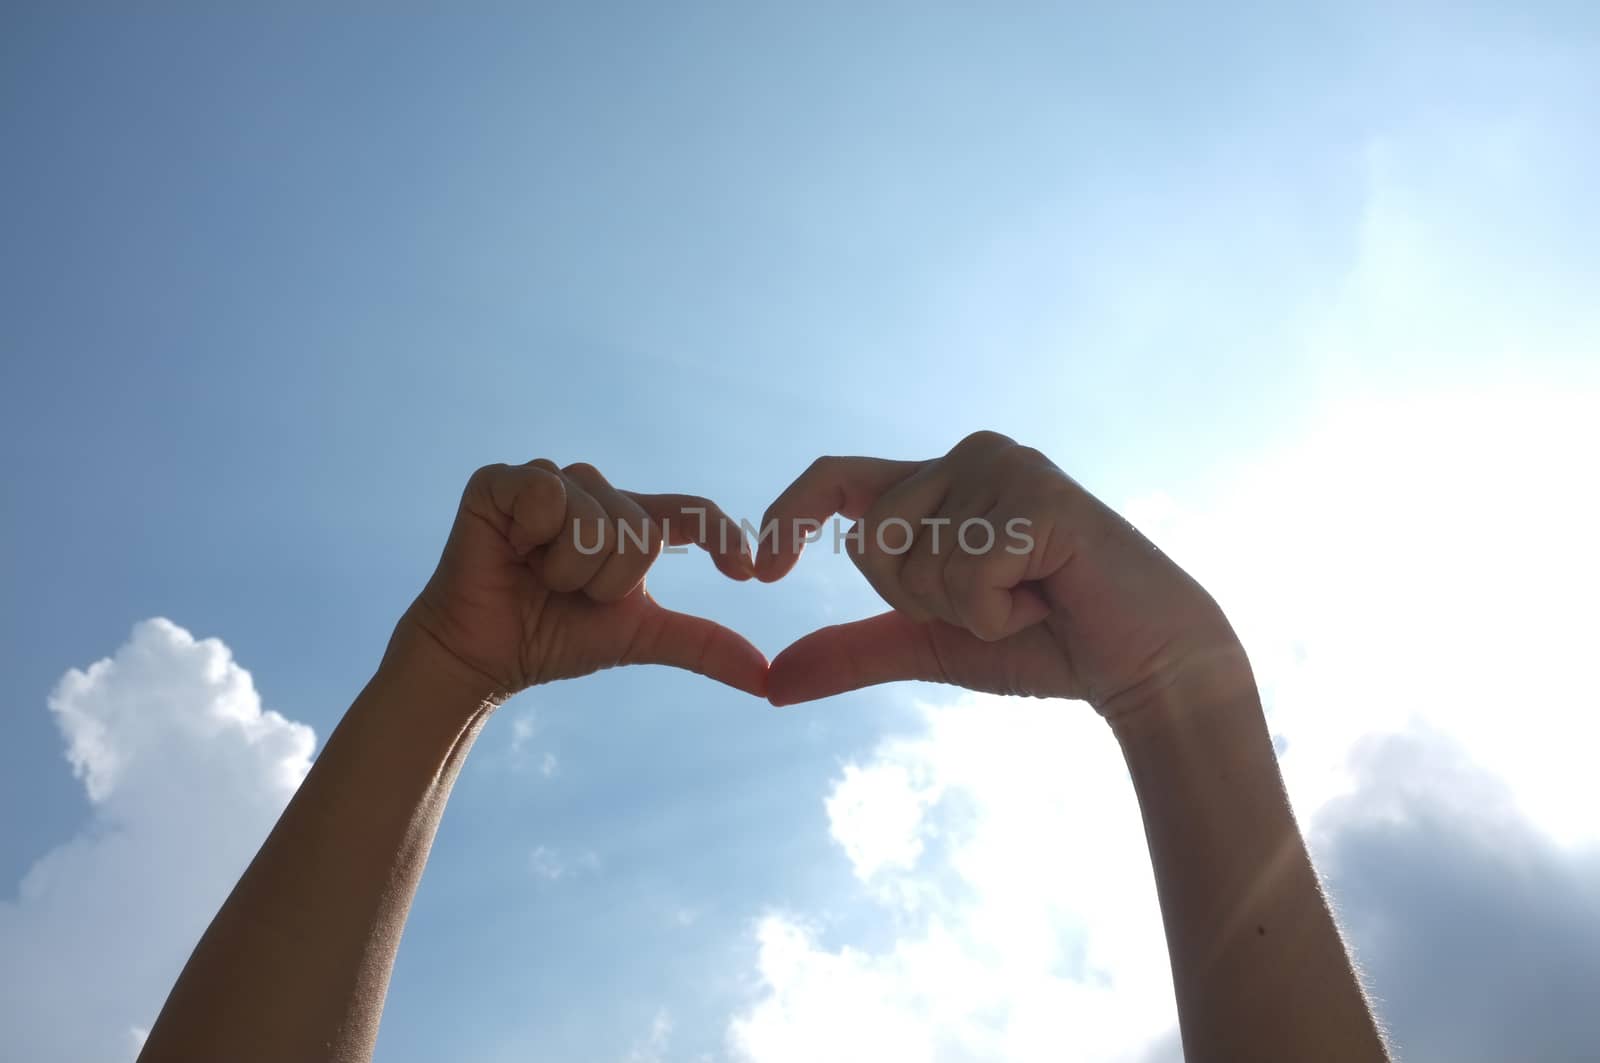 Hands shape of heart beneath blue sky by Hepjam